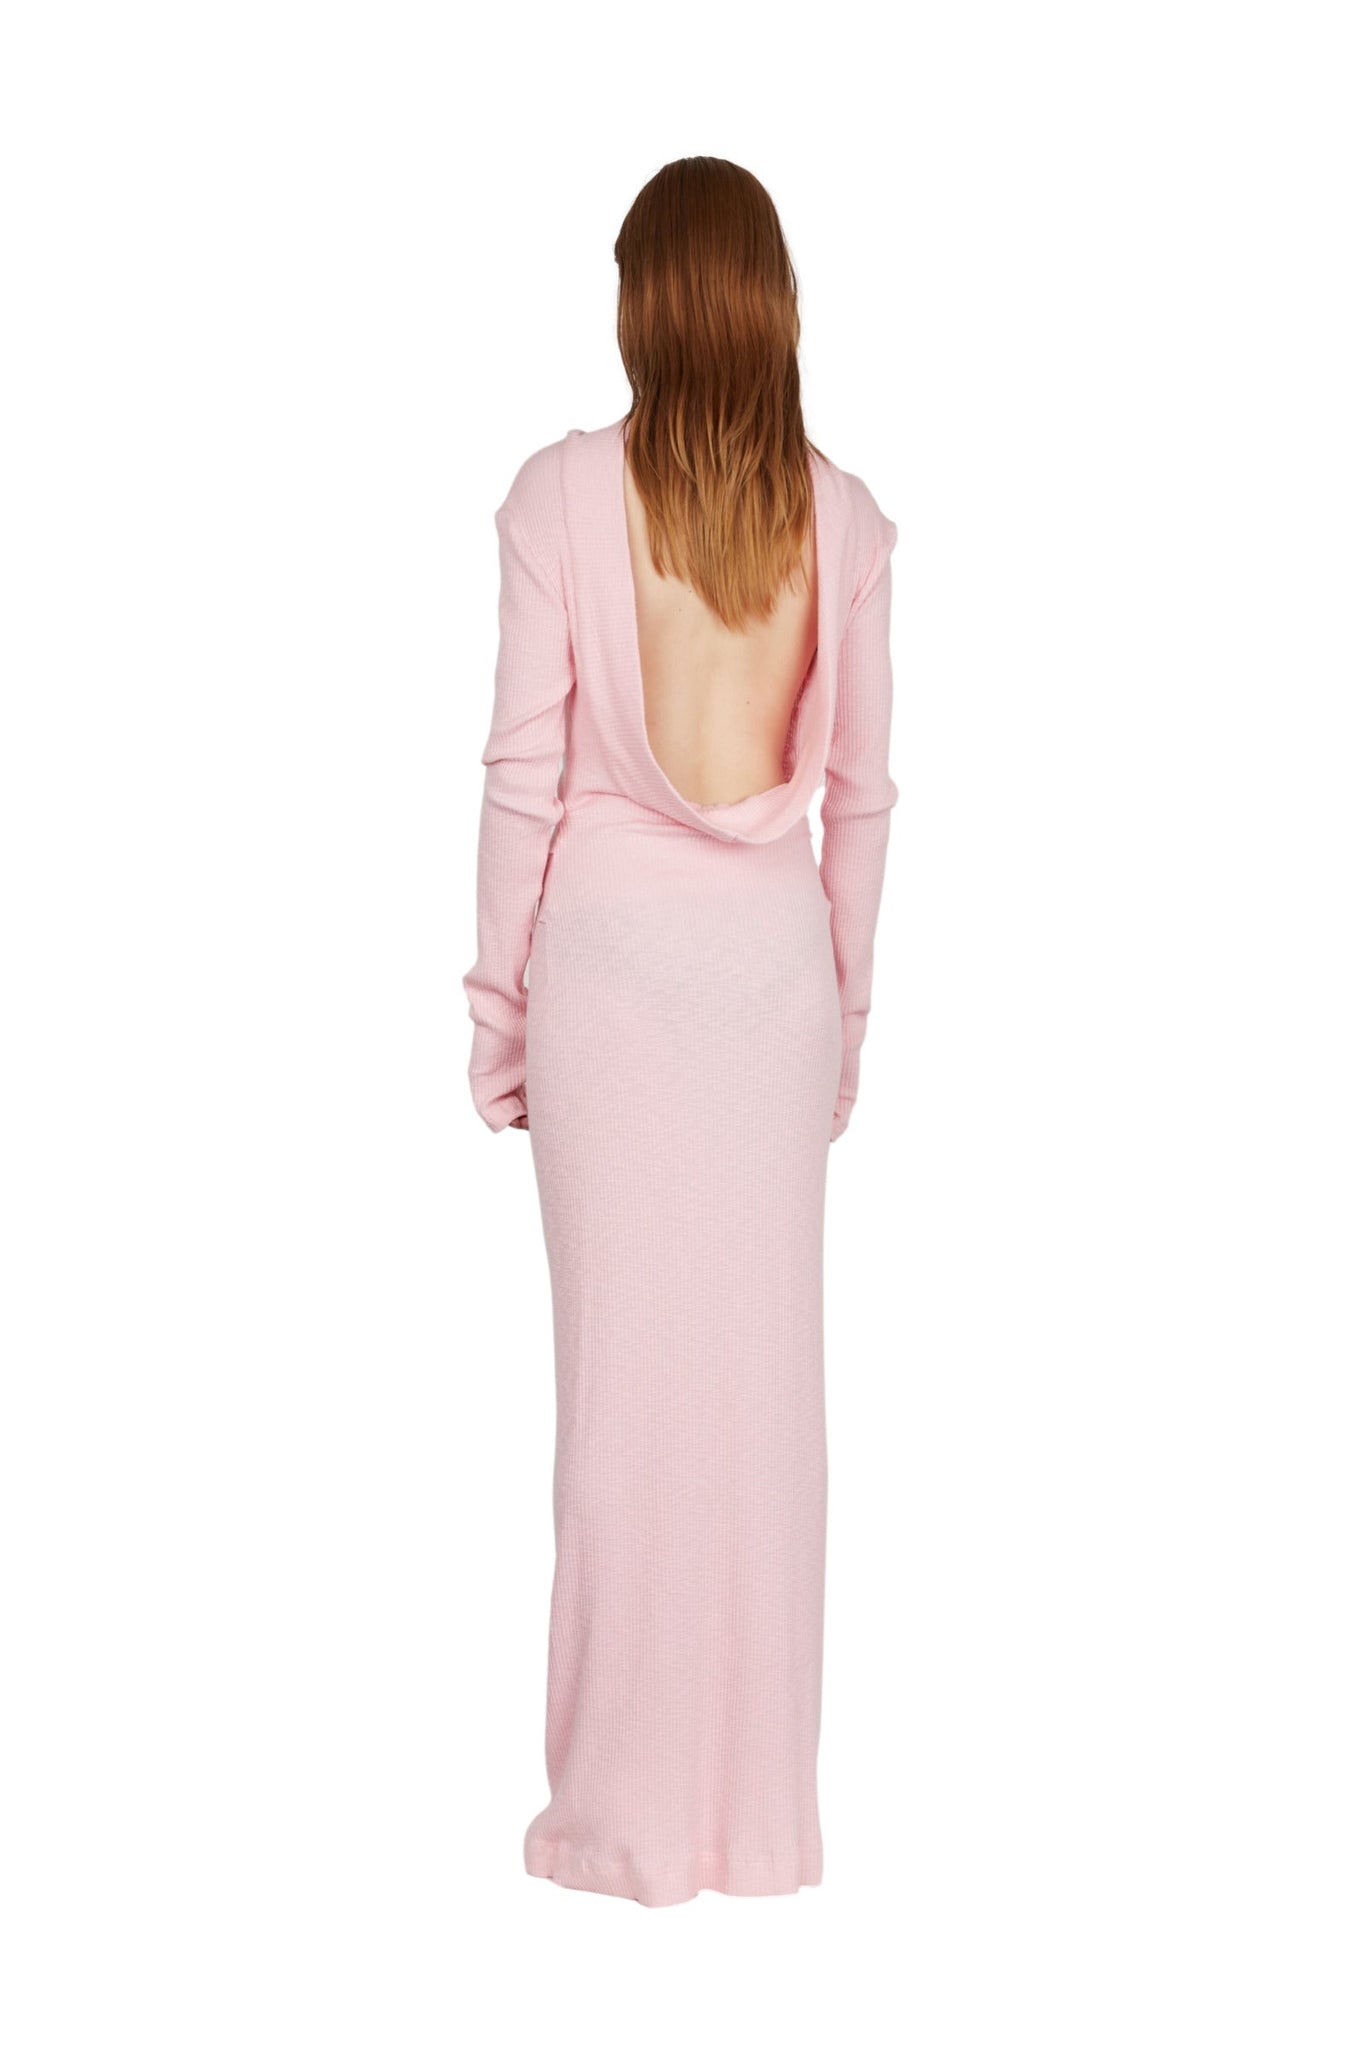 MAITREPIERRE  Louisa Dress Pink 